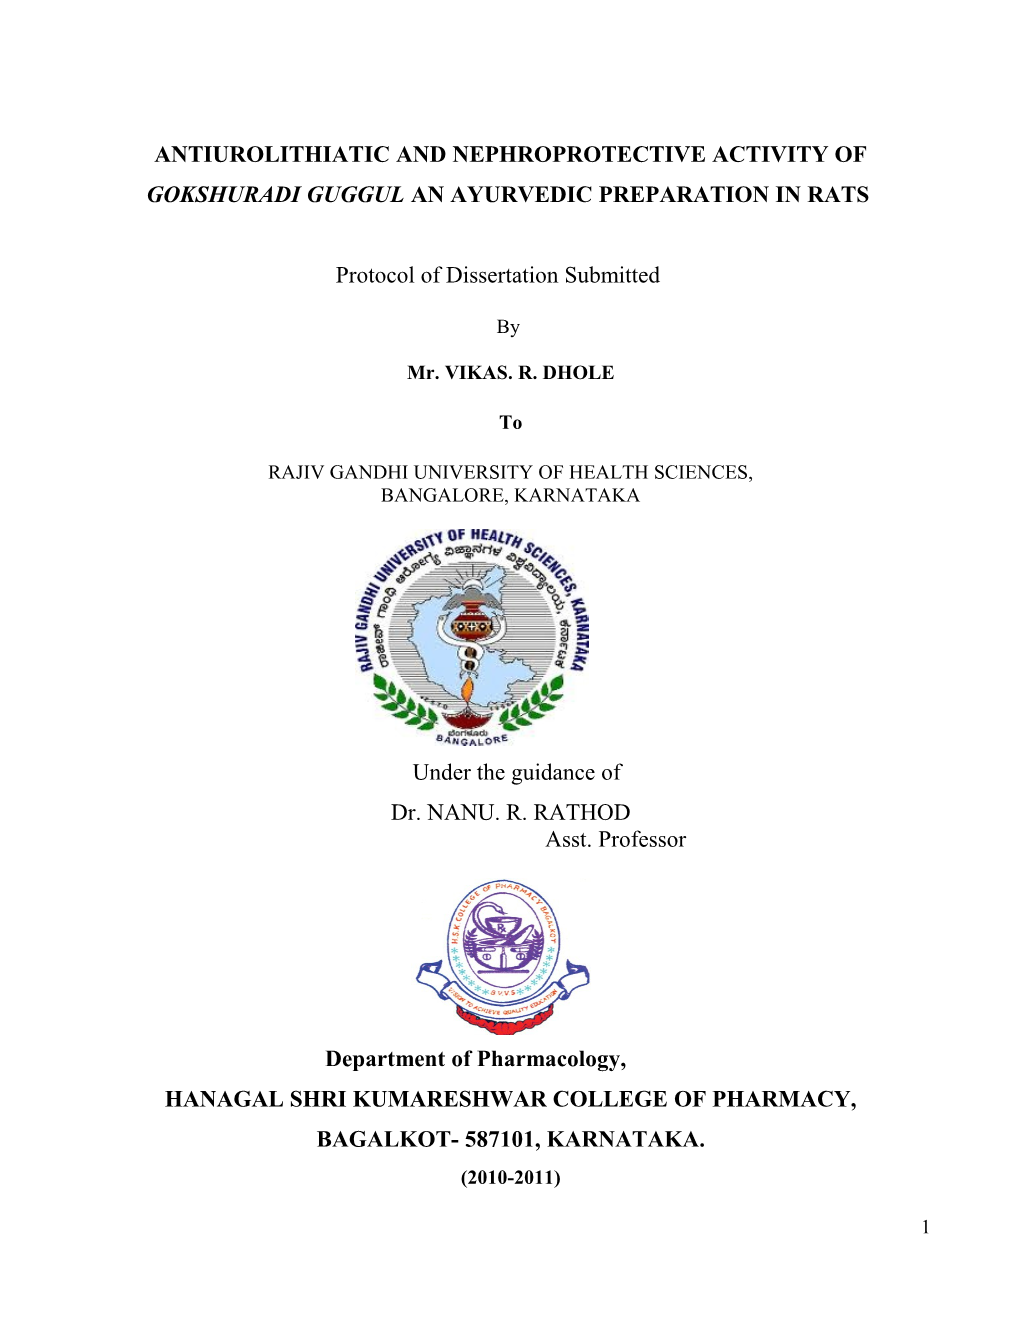 Parmacological Evaluation of Gokshuradi Guggul an Ayurvedic Preparation for Urolithiatic